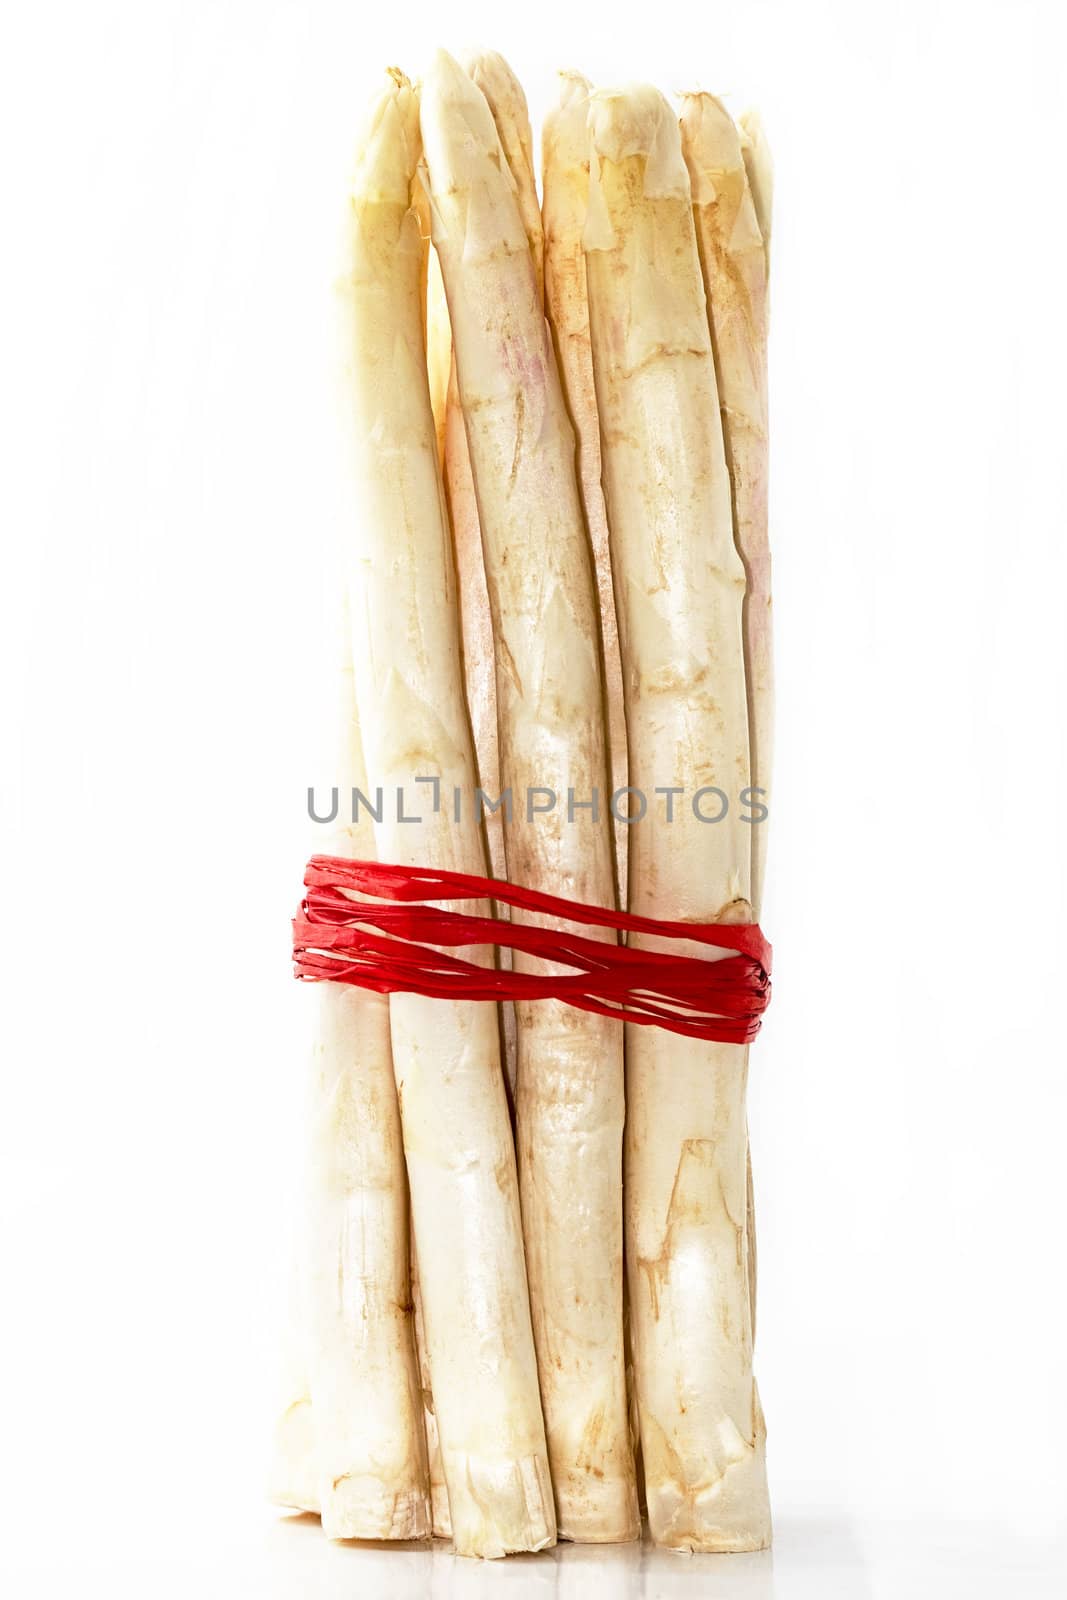 bundle white asparagus by RobStark